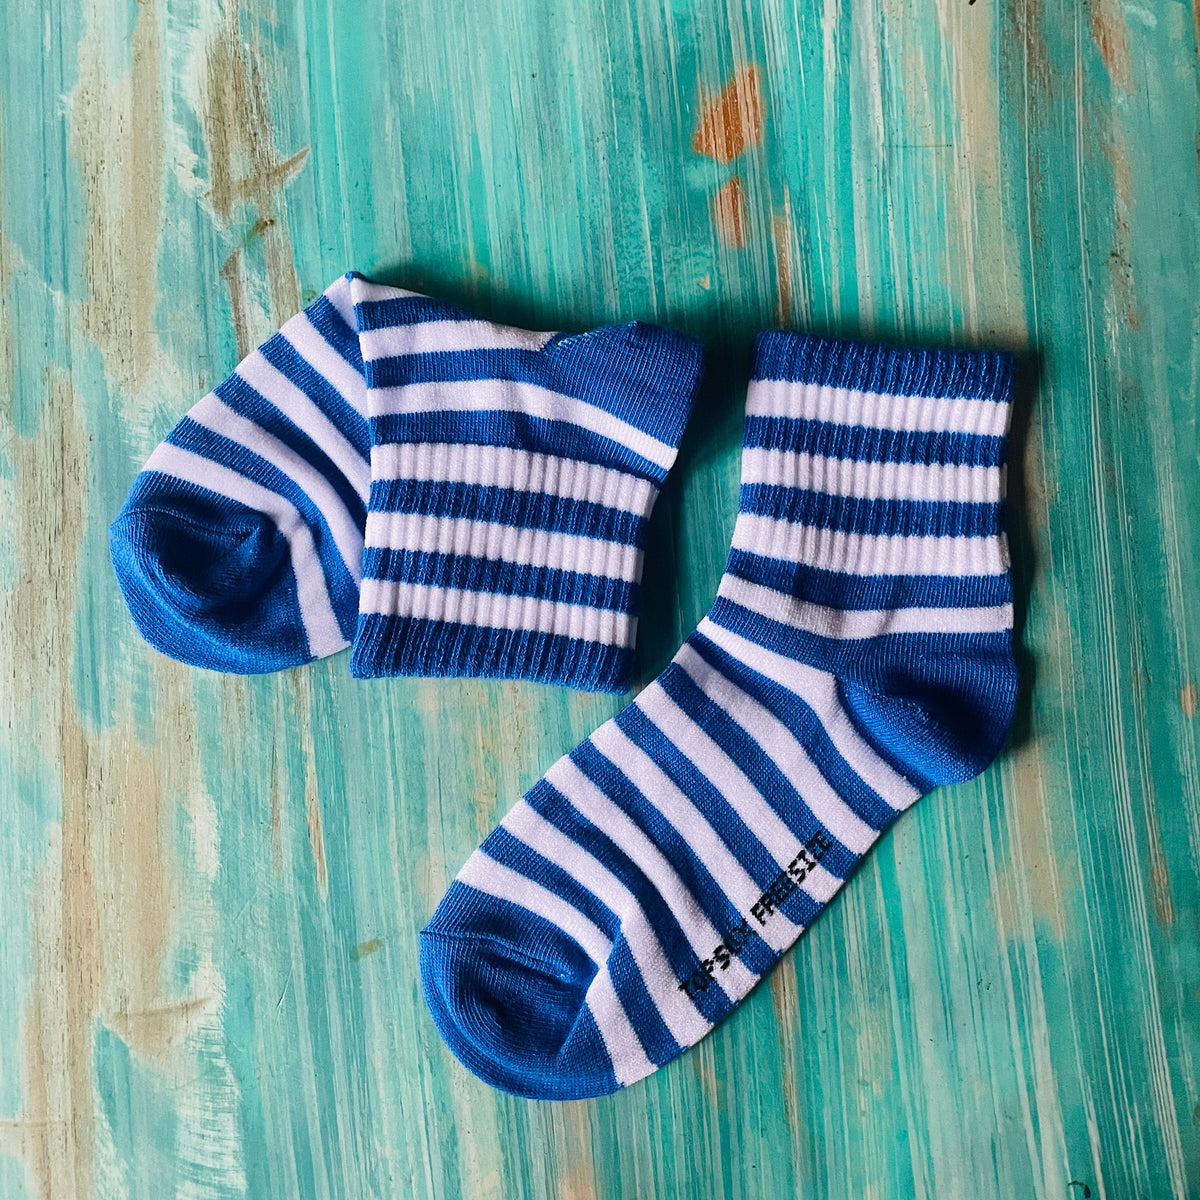 Anklets - Blue/White striped